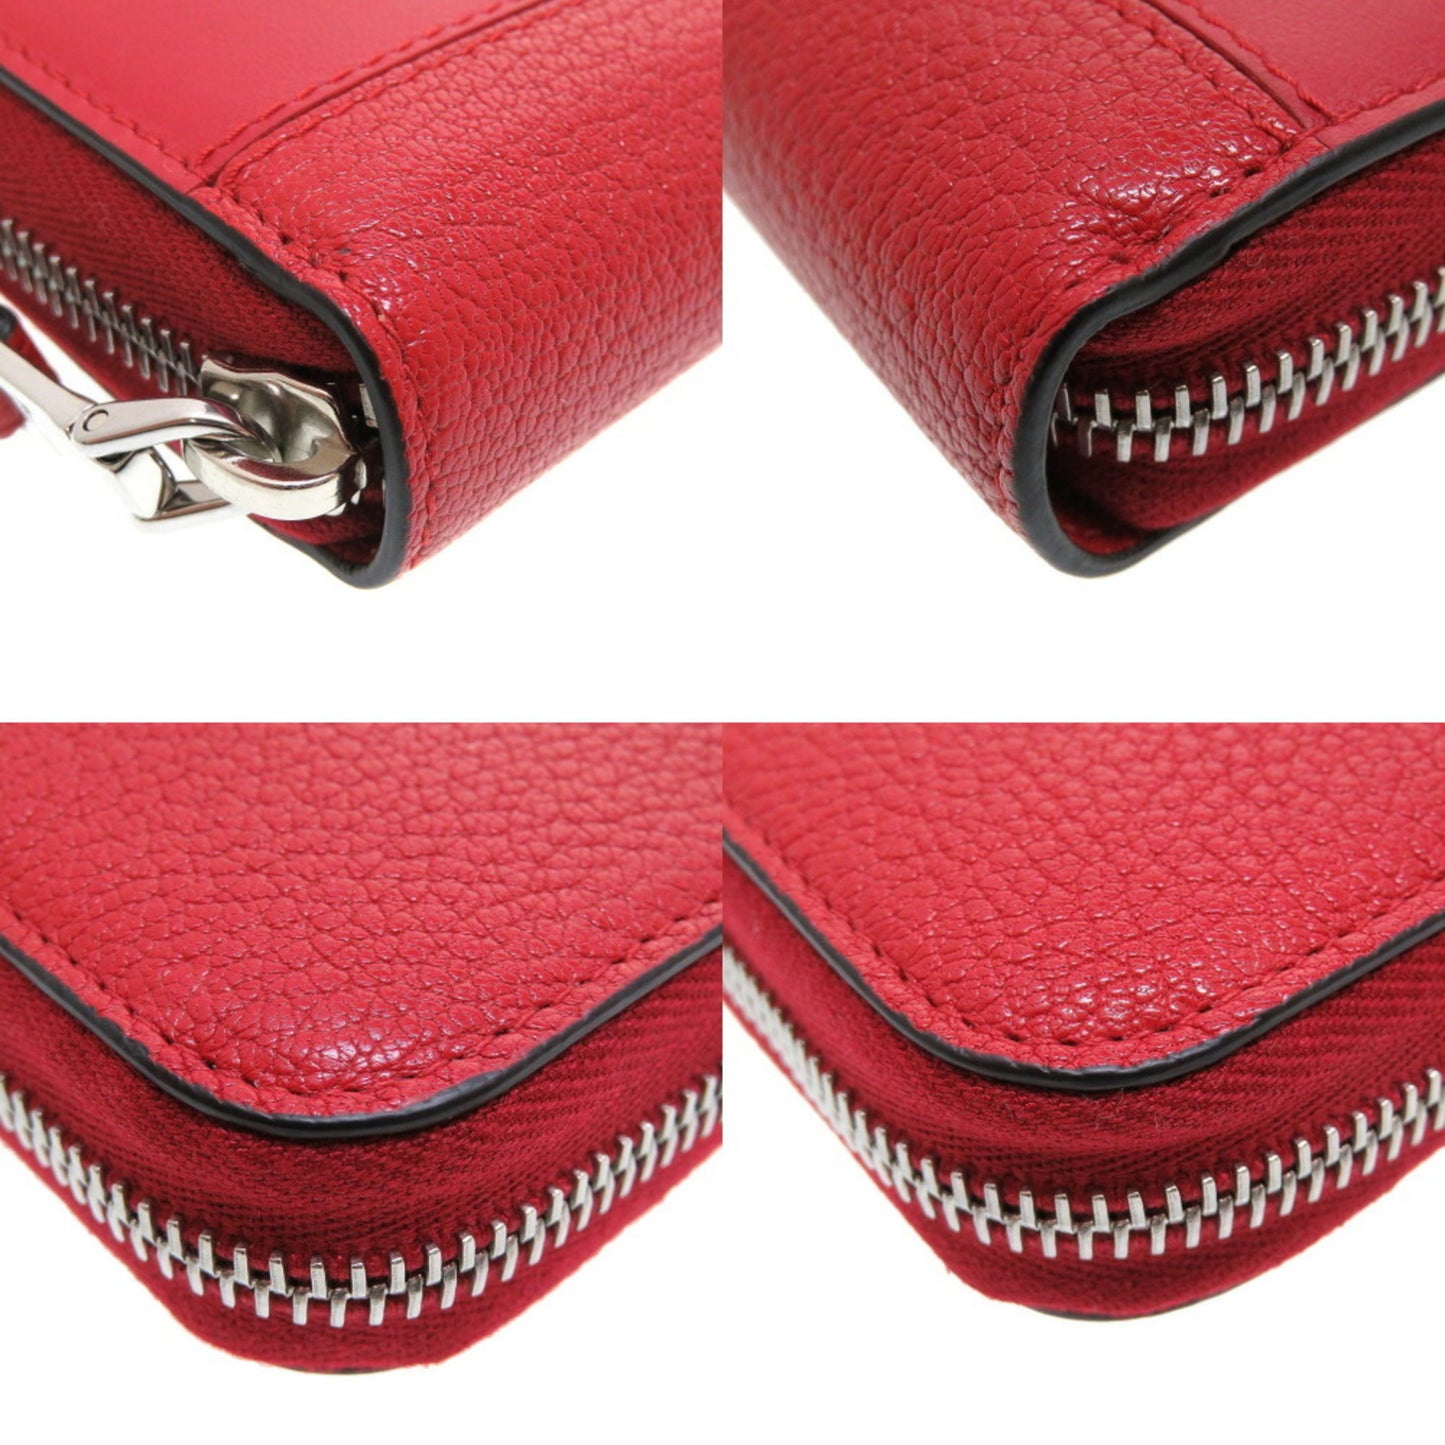 Miu Miu Women's Leather Miu Miu Wallet in Red